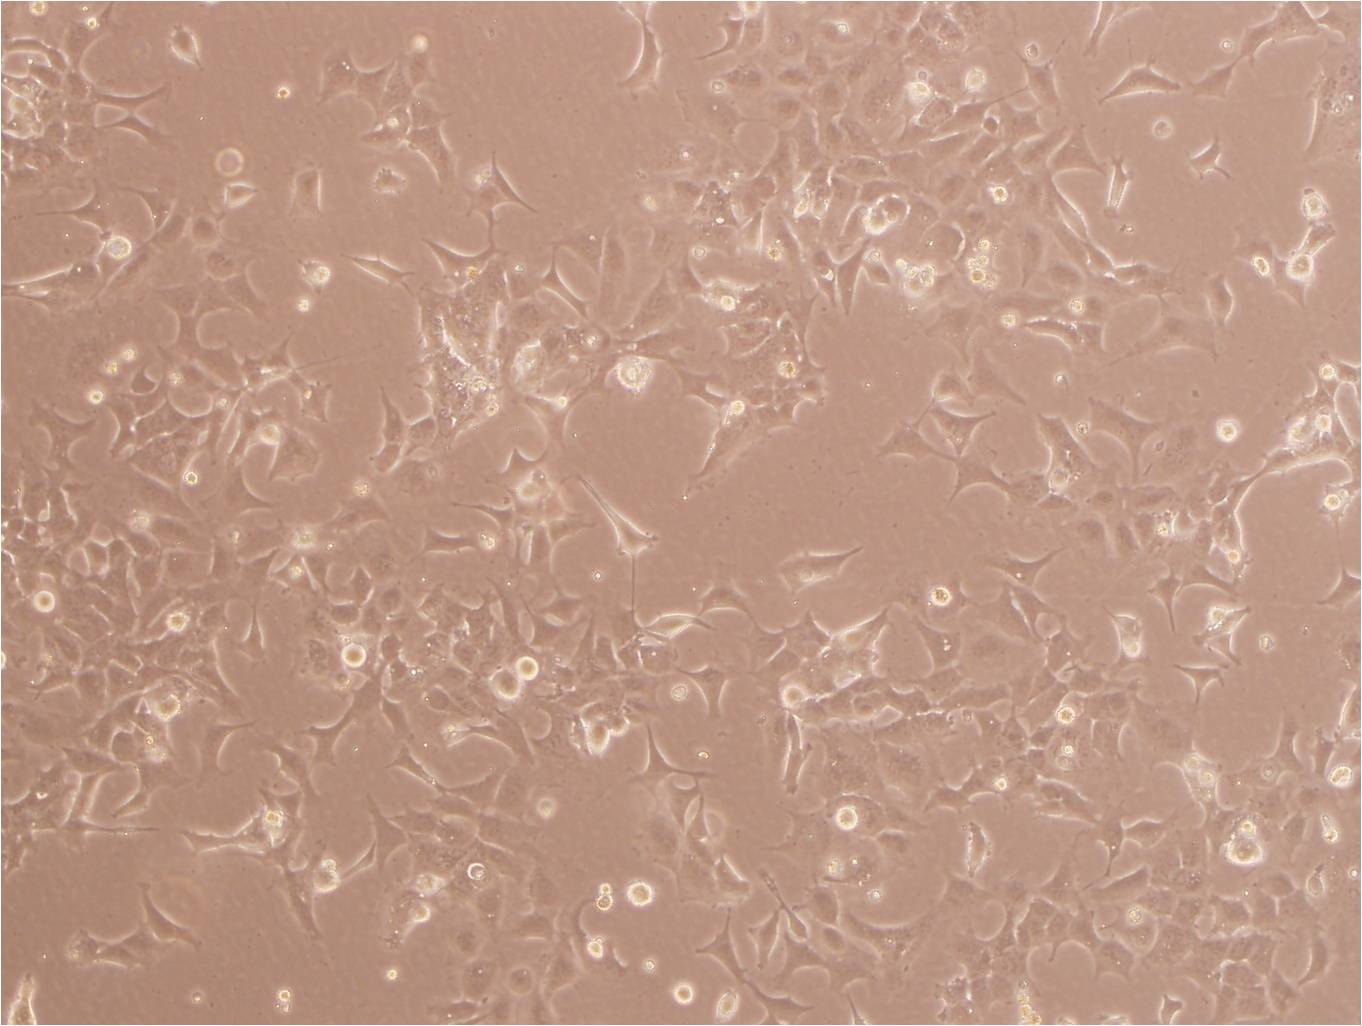 CAL-78 Cells|人软骨肉瘤可传代细胞系,CAL-78 Cells